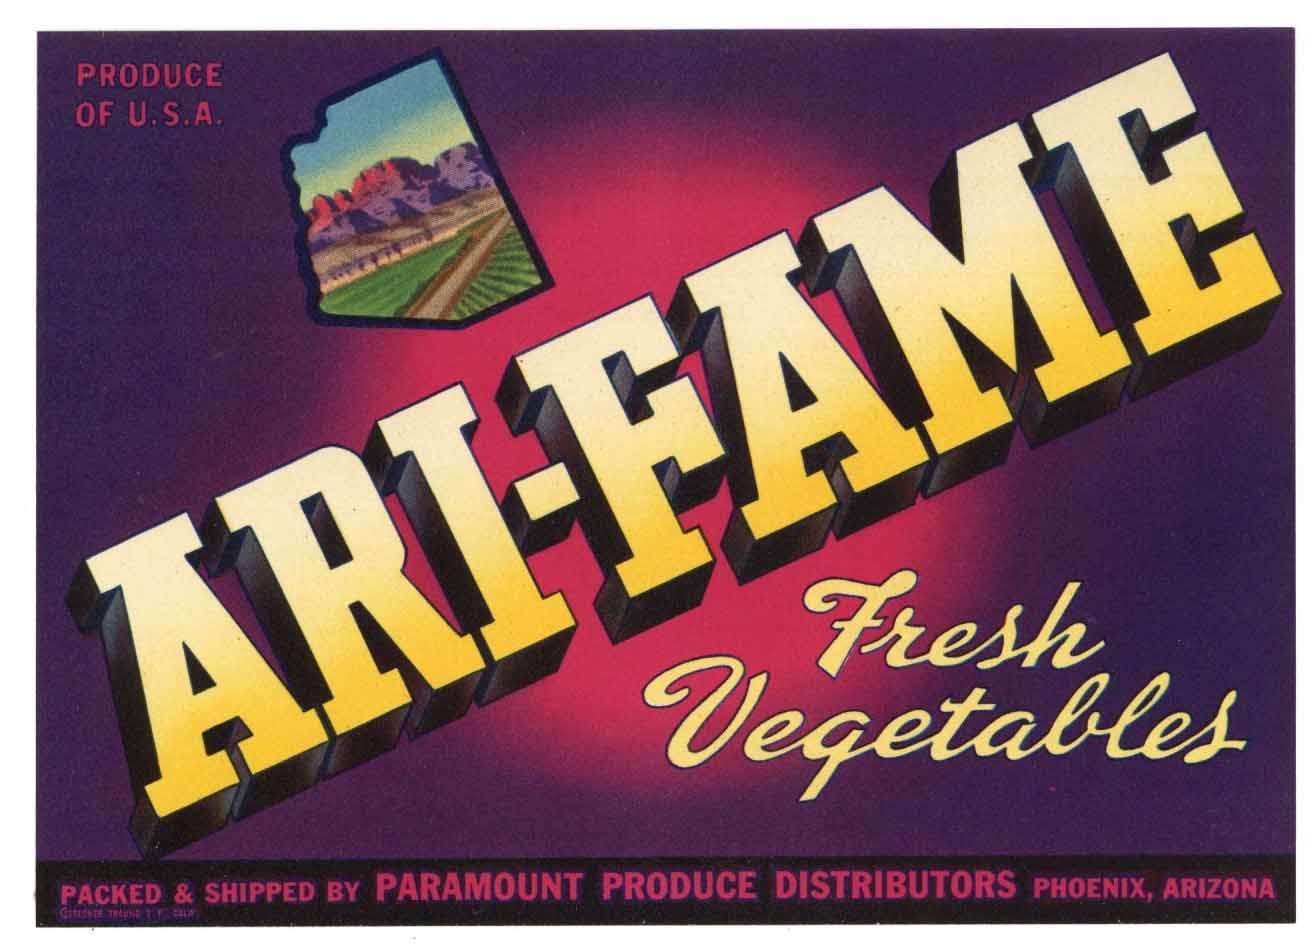 Ari-Fame Brand Vintage Phoenix Arizona Vegetable Crate Label